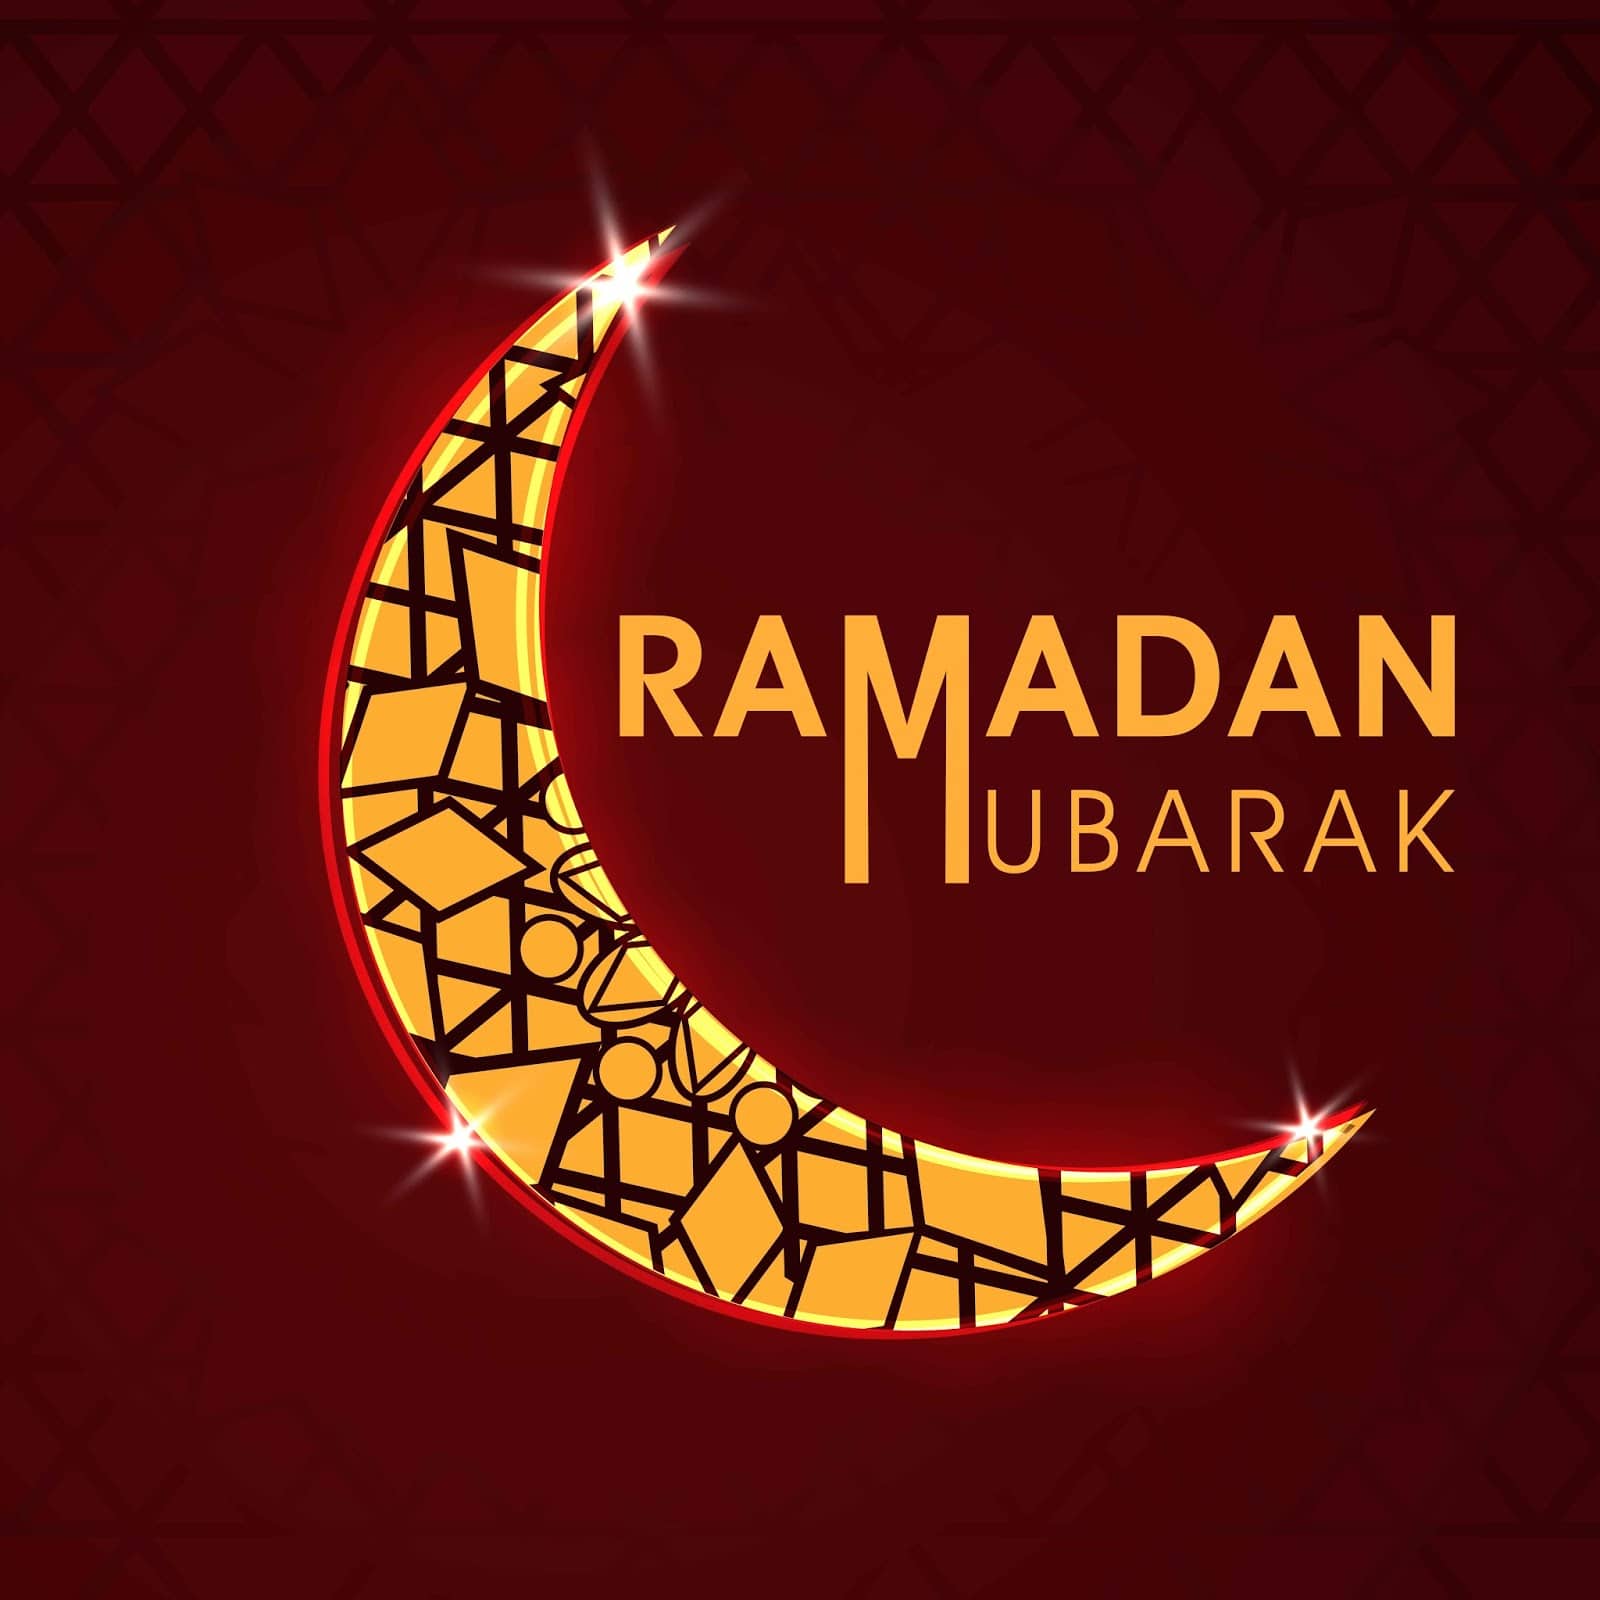 Ramadan Wishes Images Oppidan Library